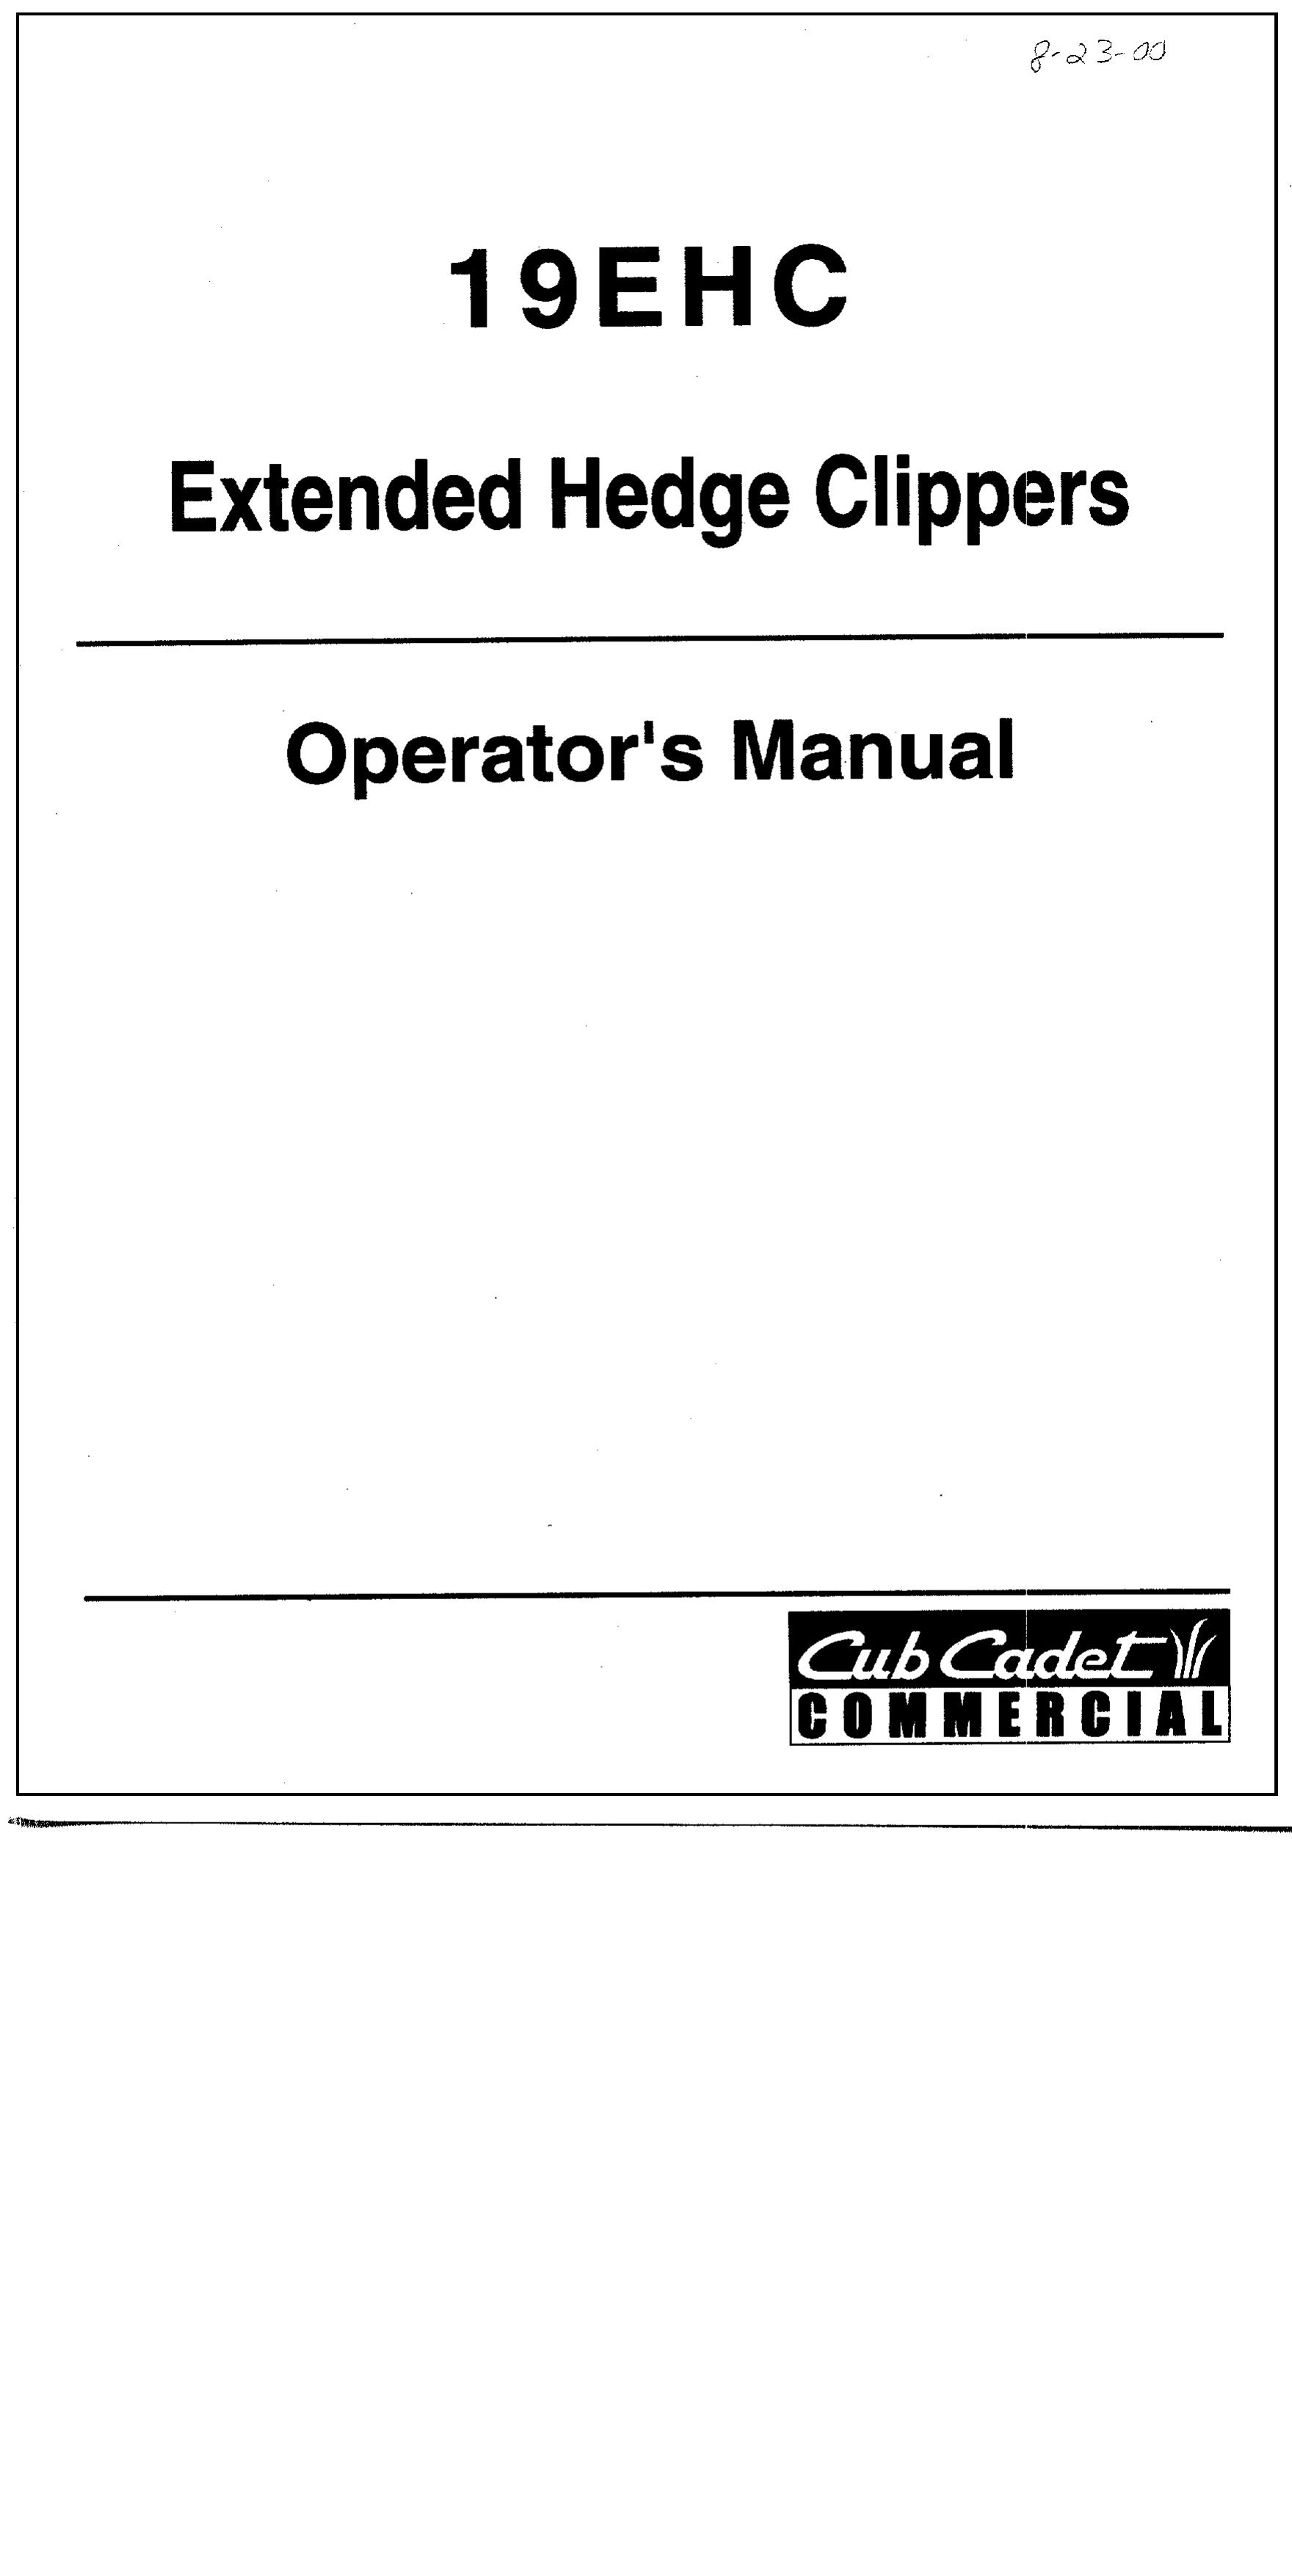 Cub Cadet 19EHC Trimmer User Manual